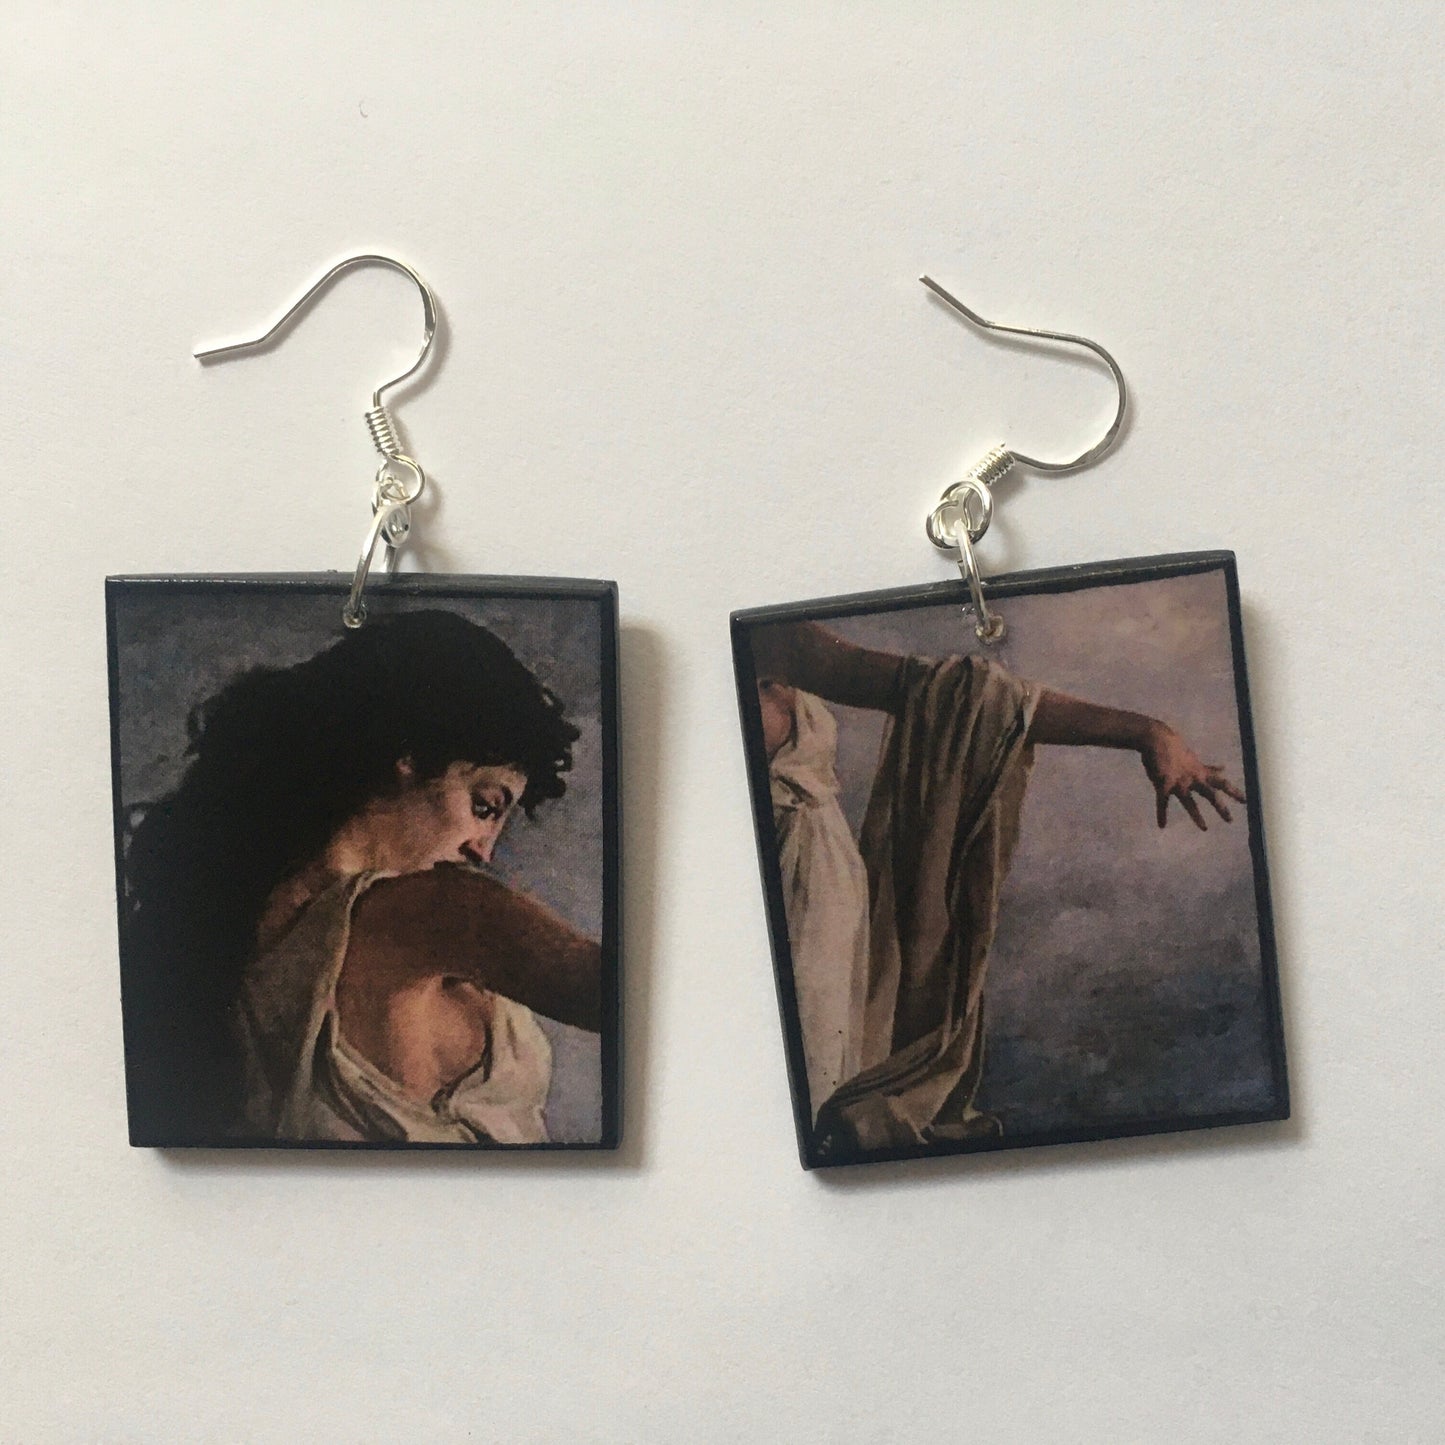 These lightweight earrings represent a story of Greek mythological sapphic art.  lesbian art earrings gift.